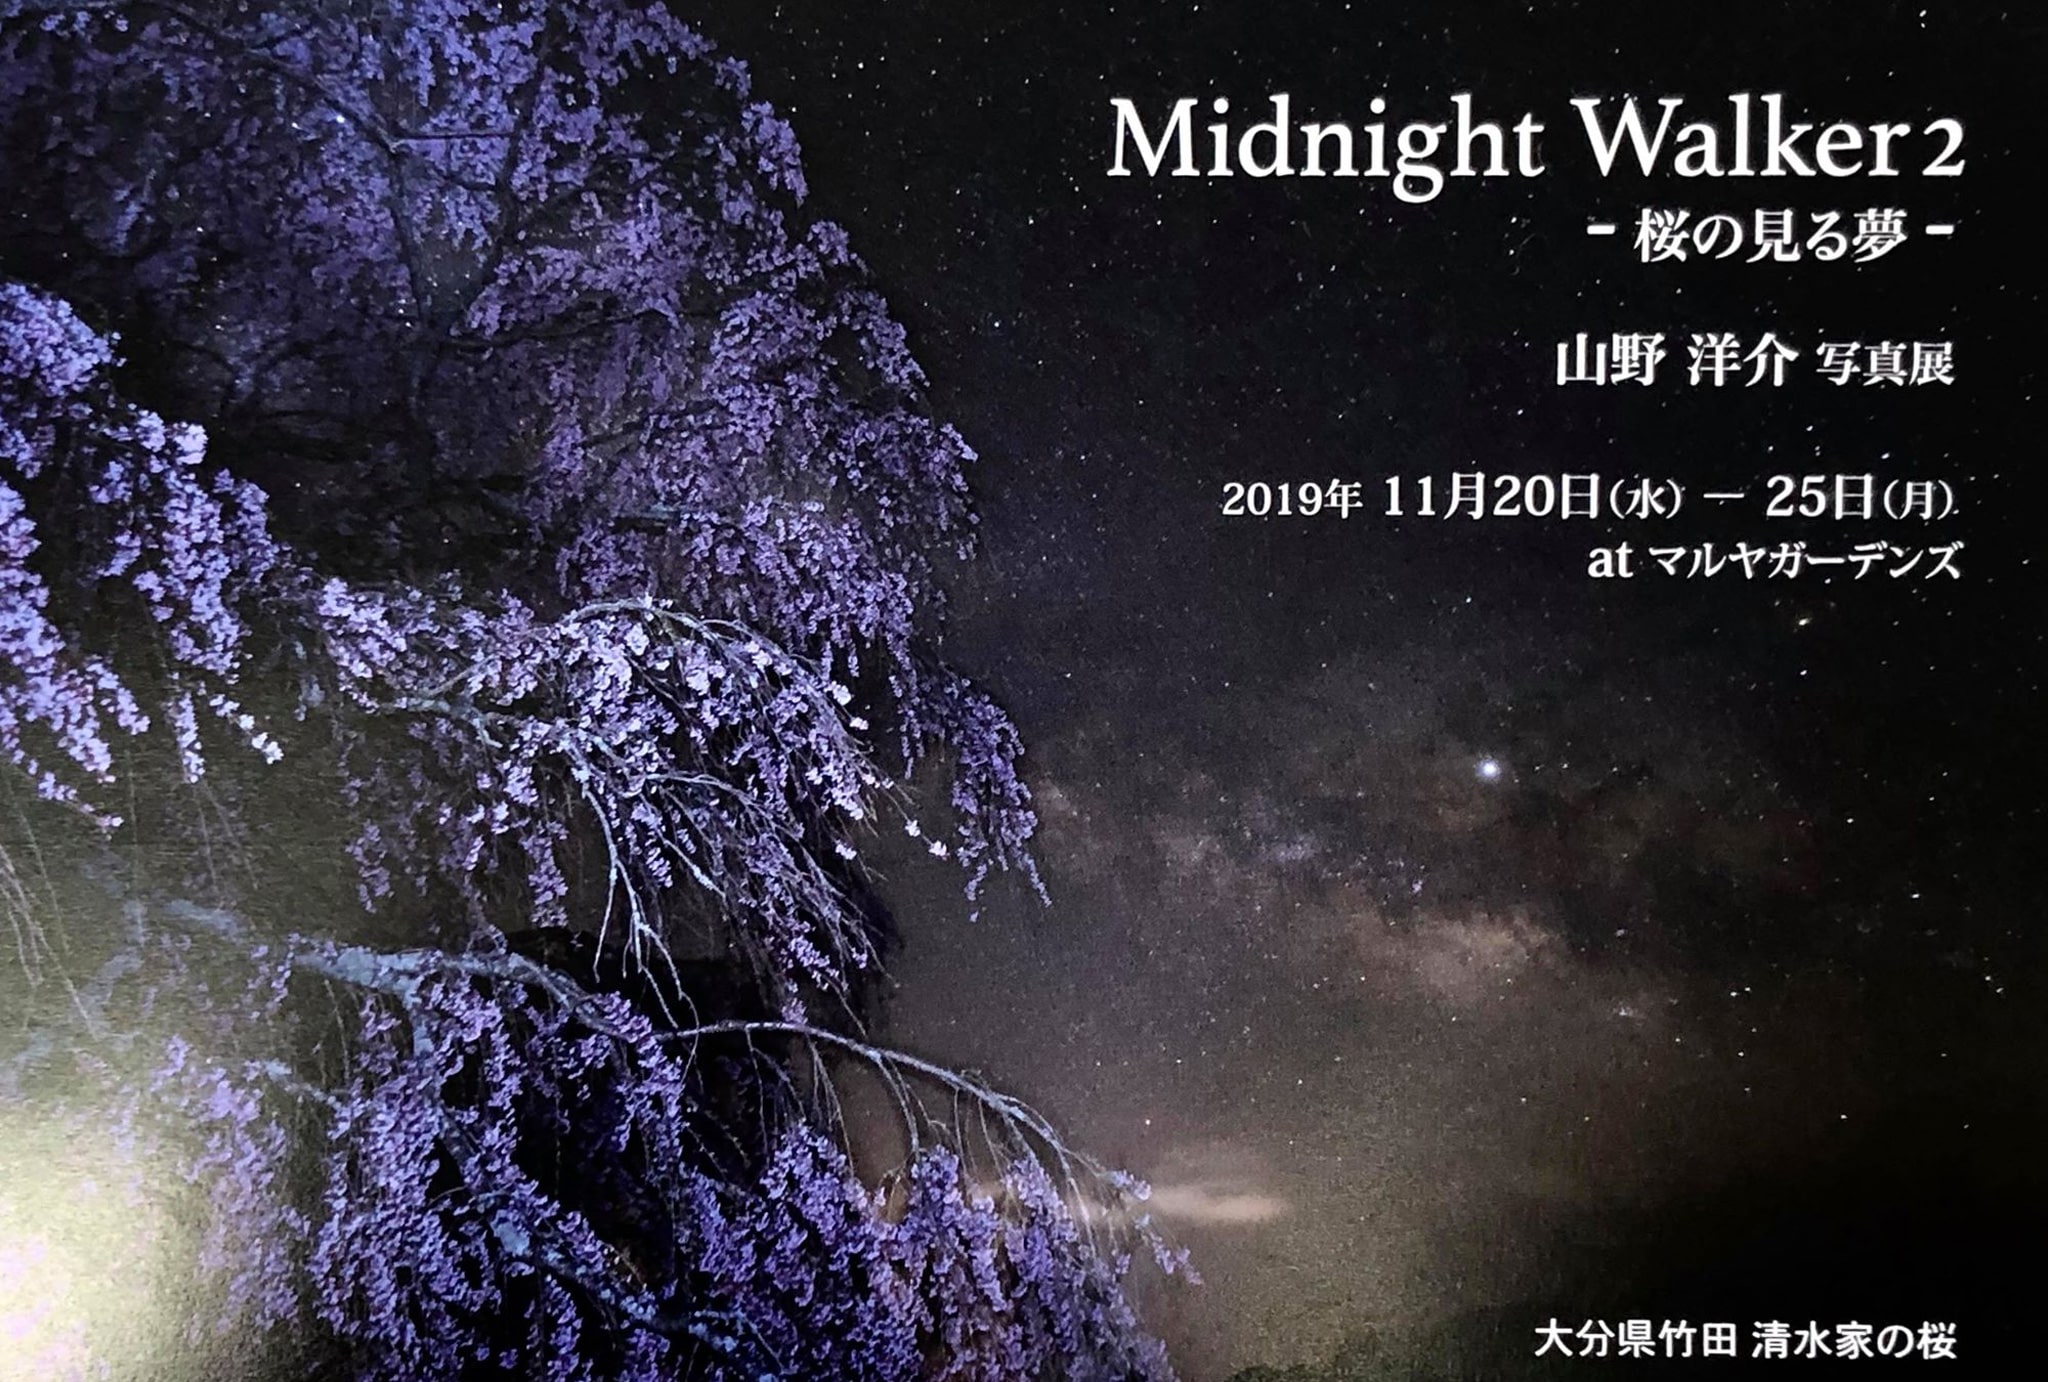 Midnight Walker2 -桜の見る夢- 山野洋介写真展